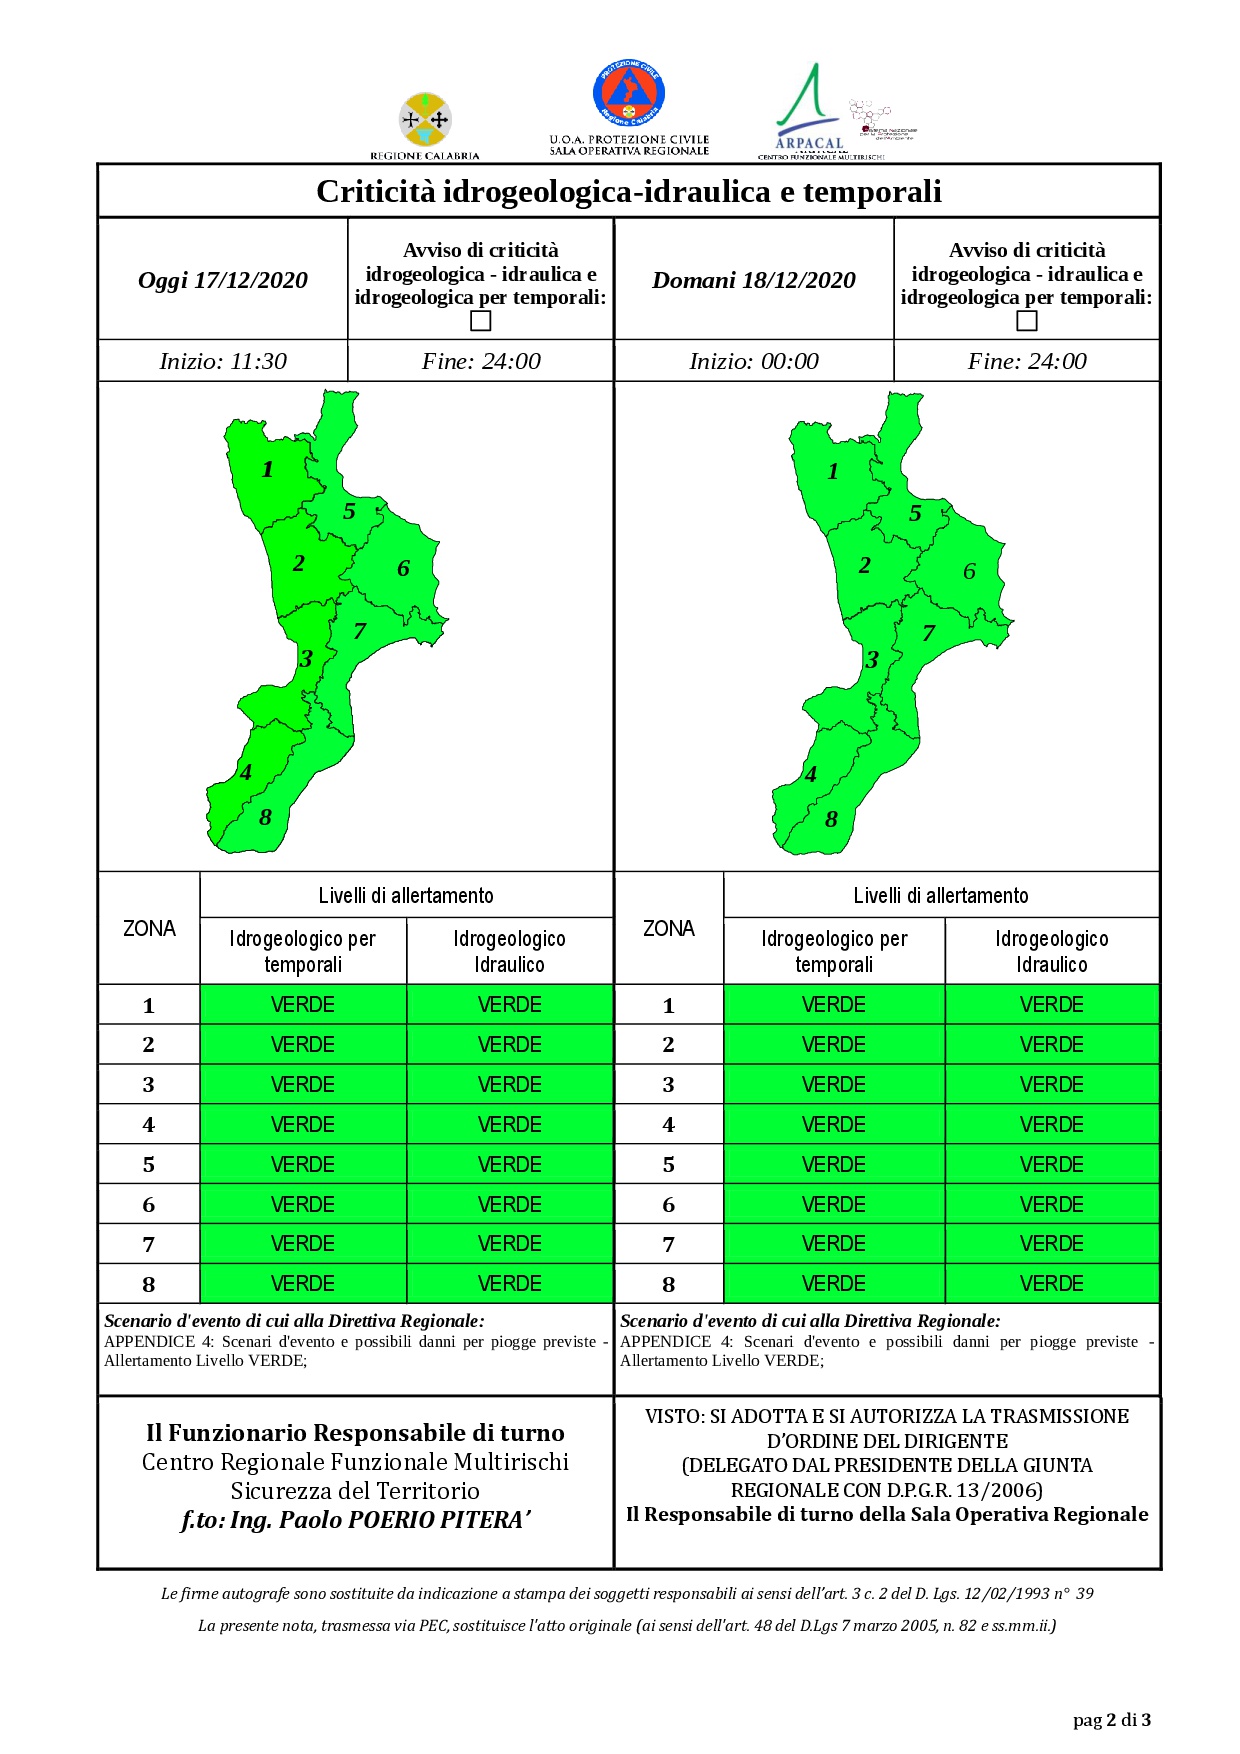 Criticità idrogeologica-idraulica e temporali in Calabria 17-12-2020